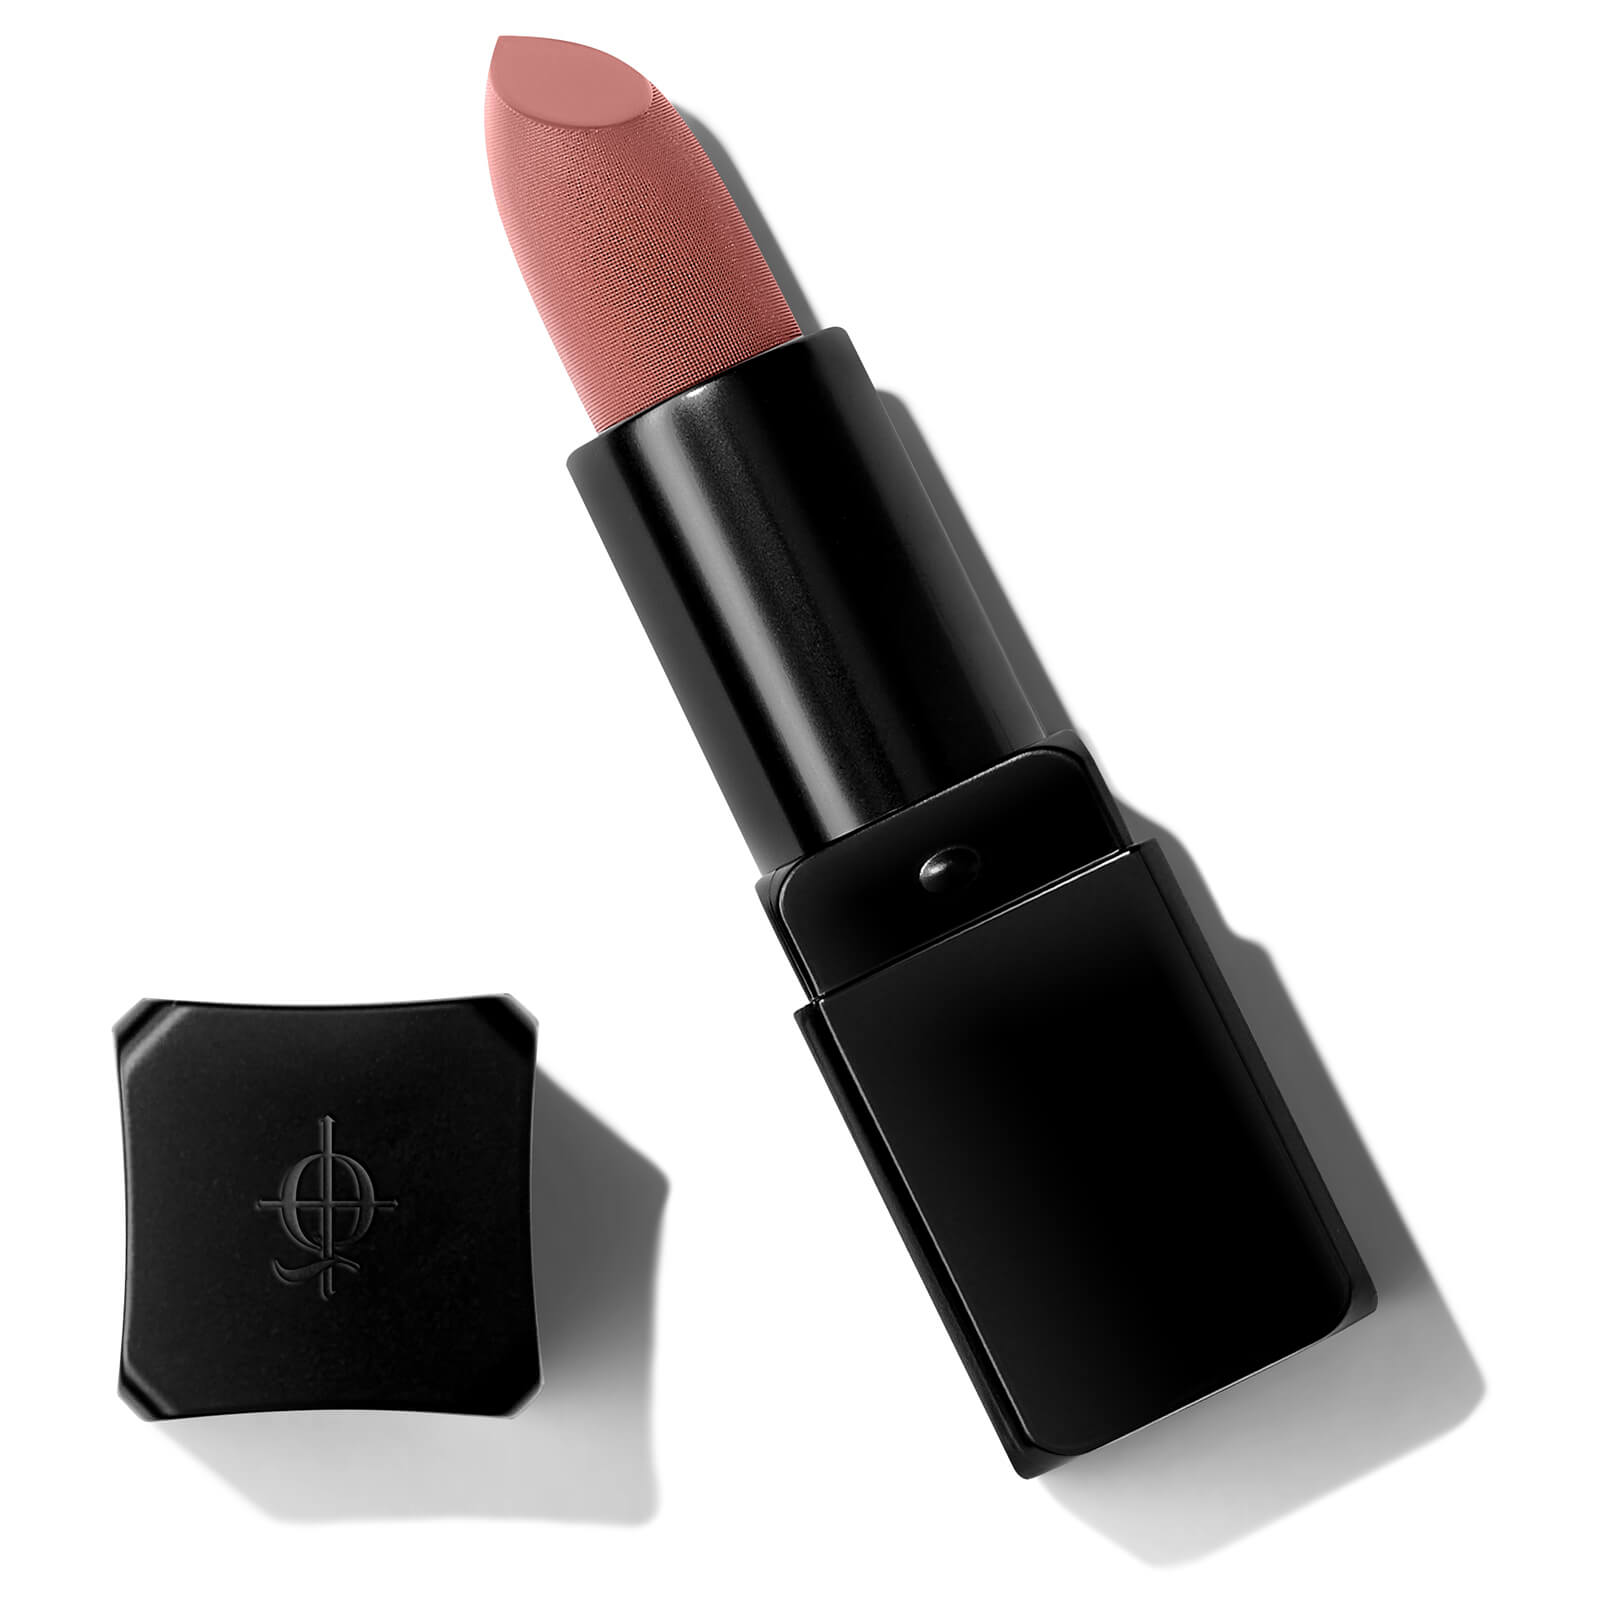 Illamasqua Ultramatter Lipstick 4g (Various Shades) - Bare